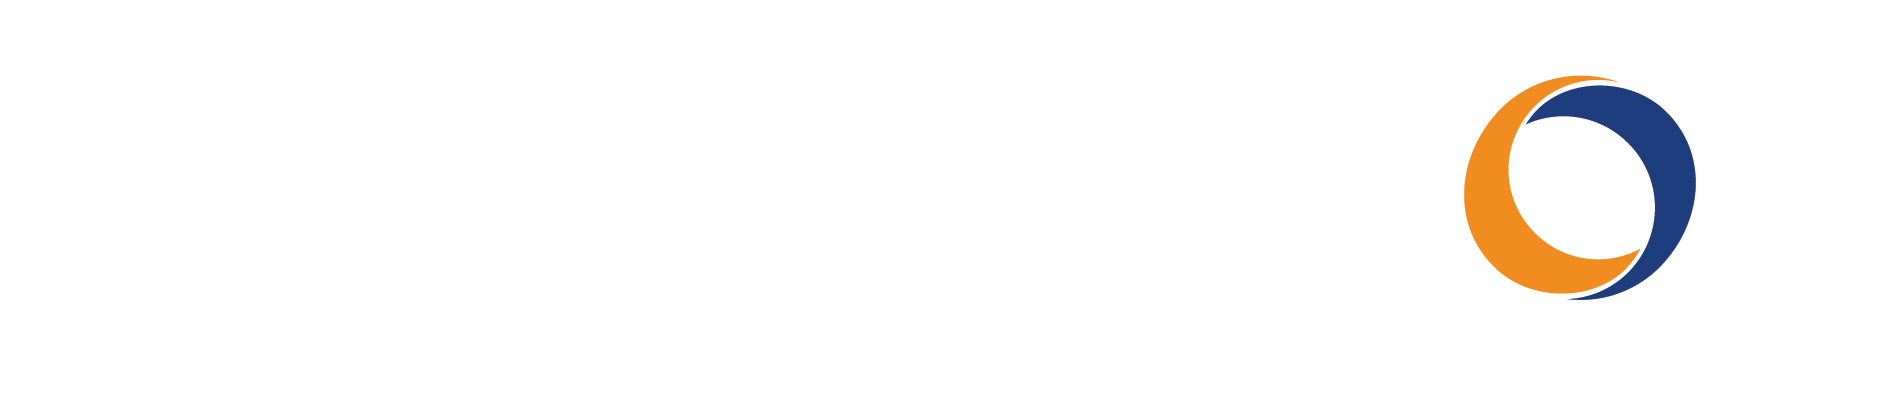 SurgiVision_Logo_ColourReverse